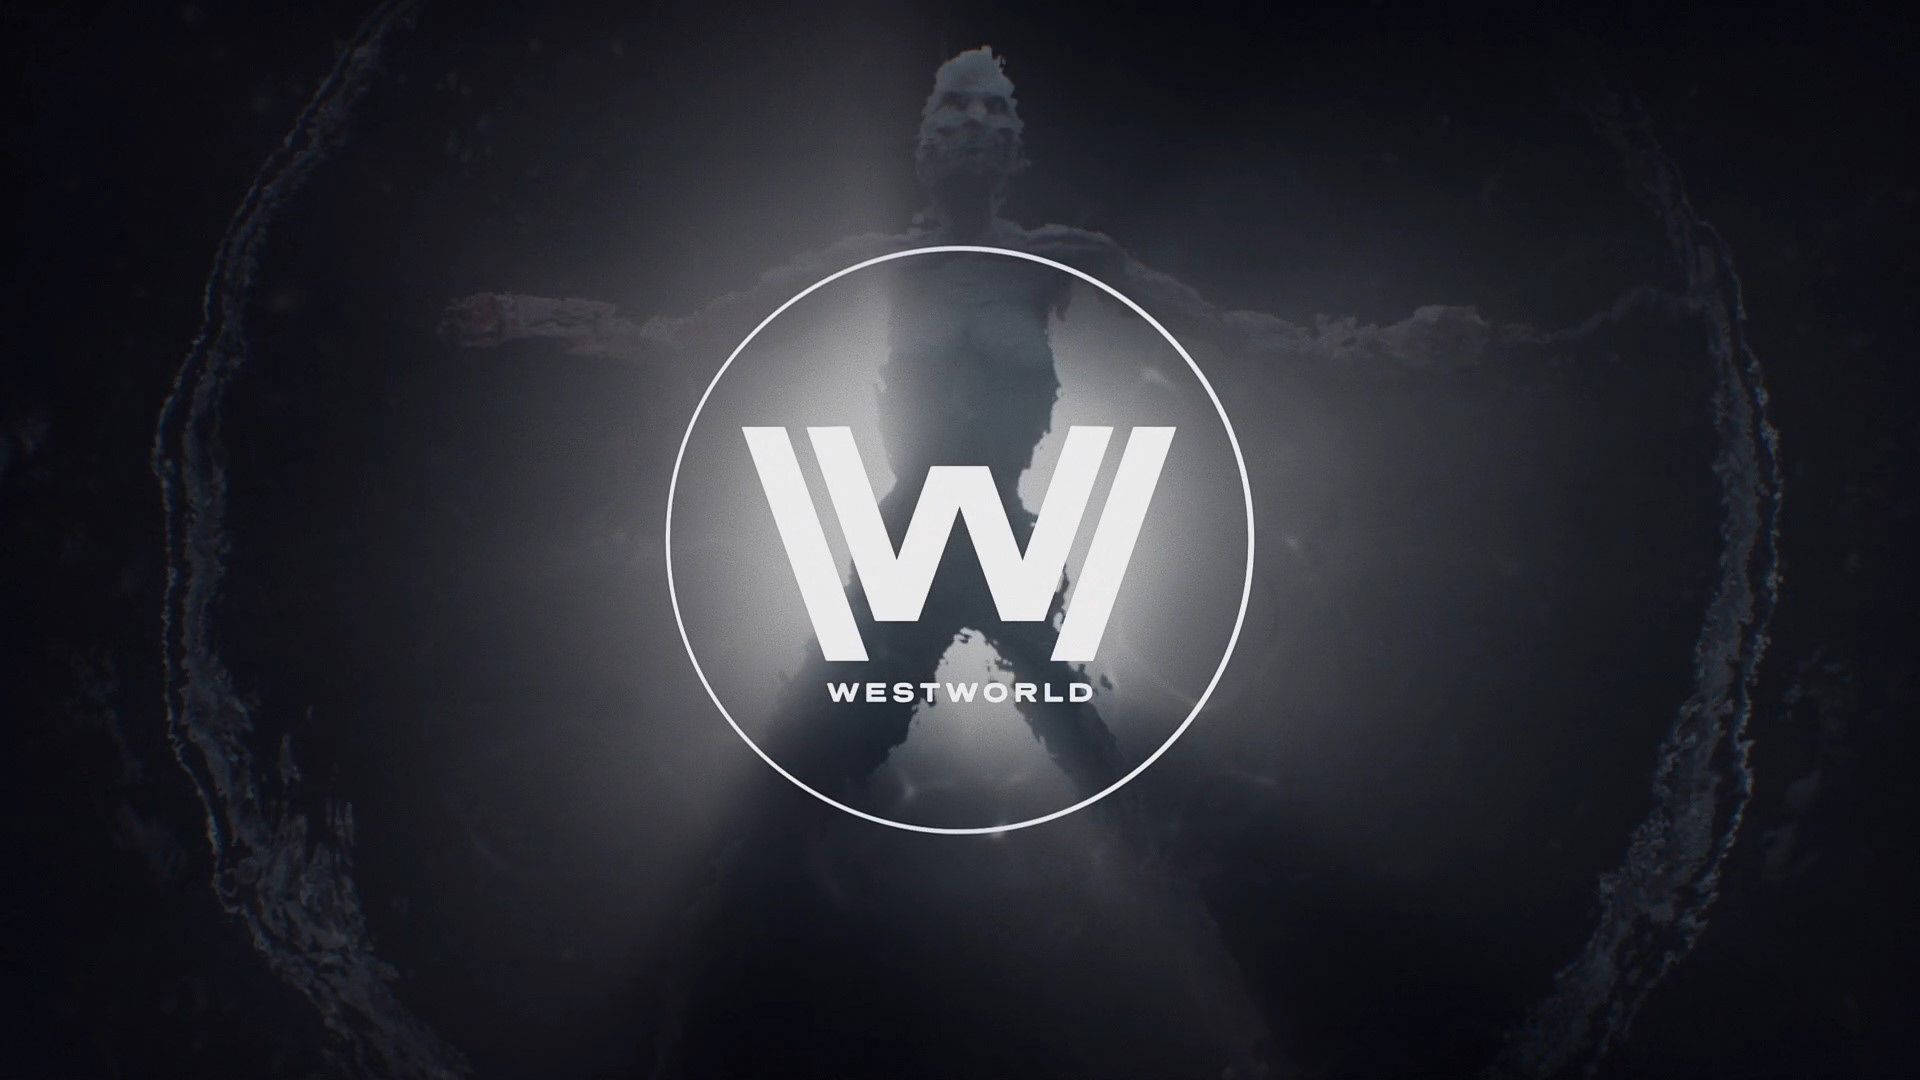 Westworld Symbol With Robot Background